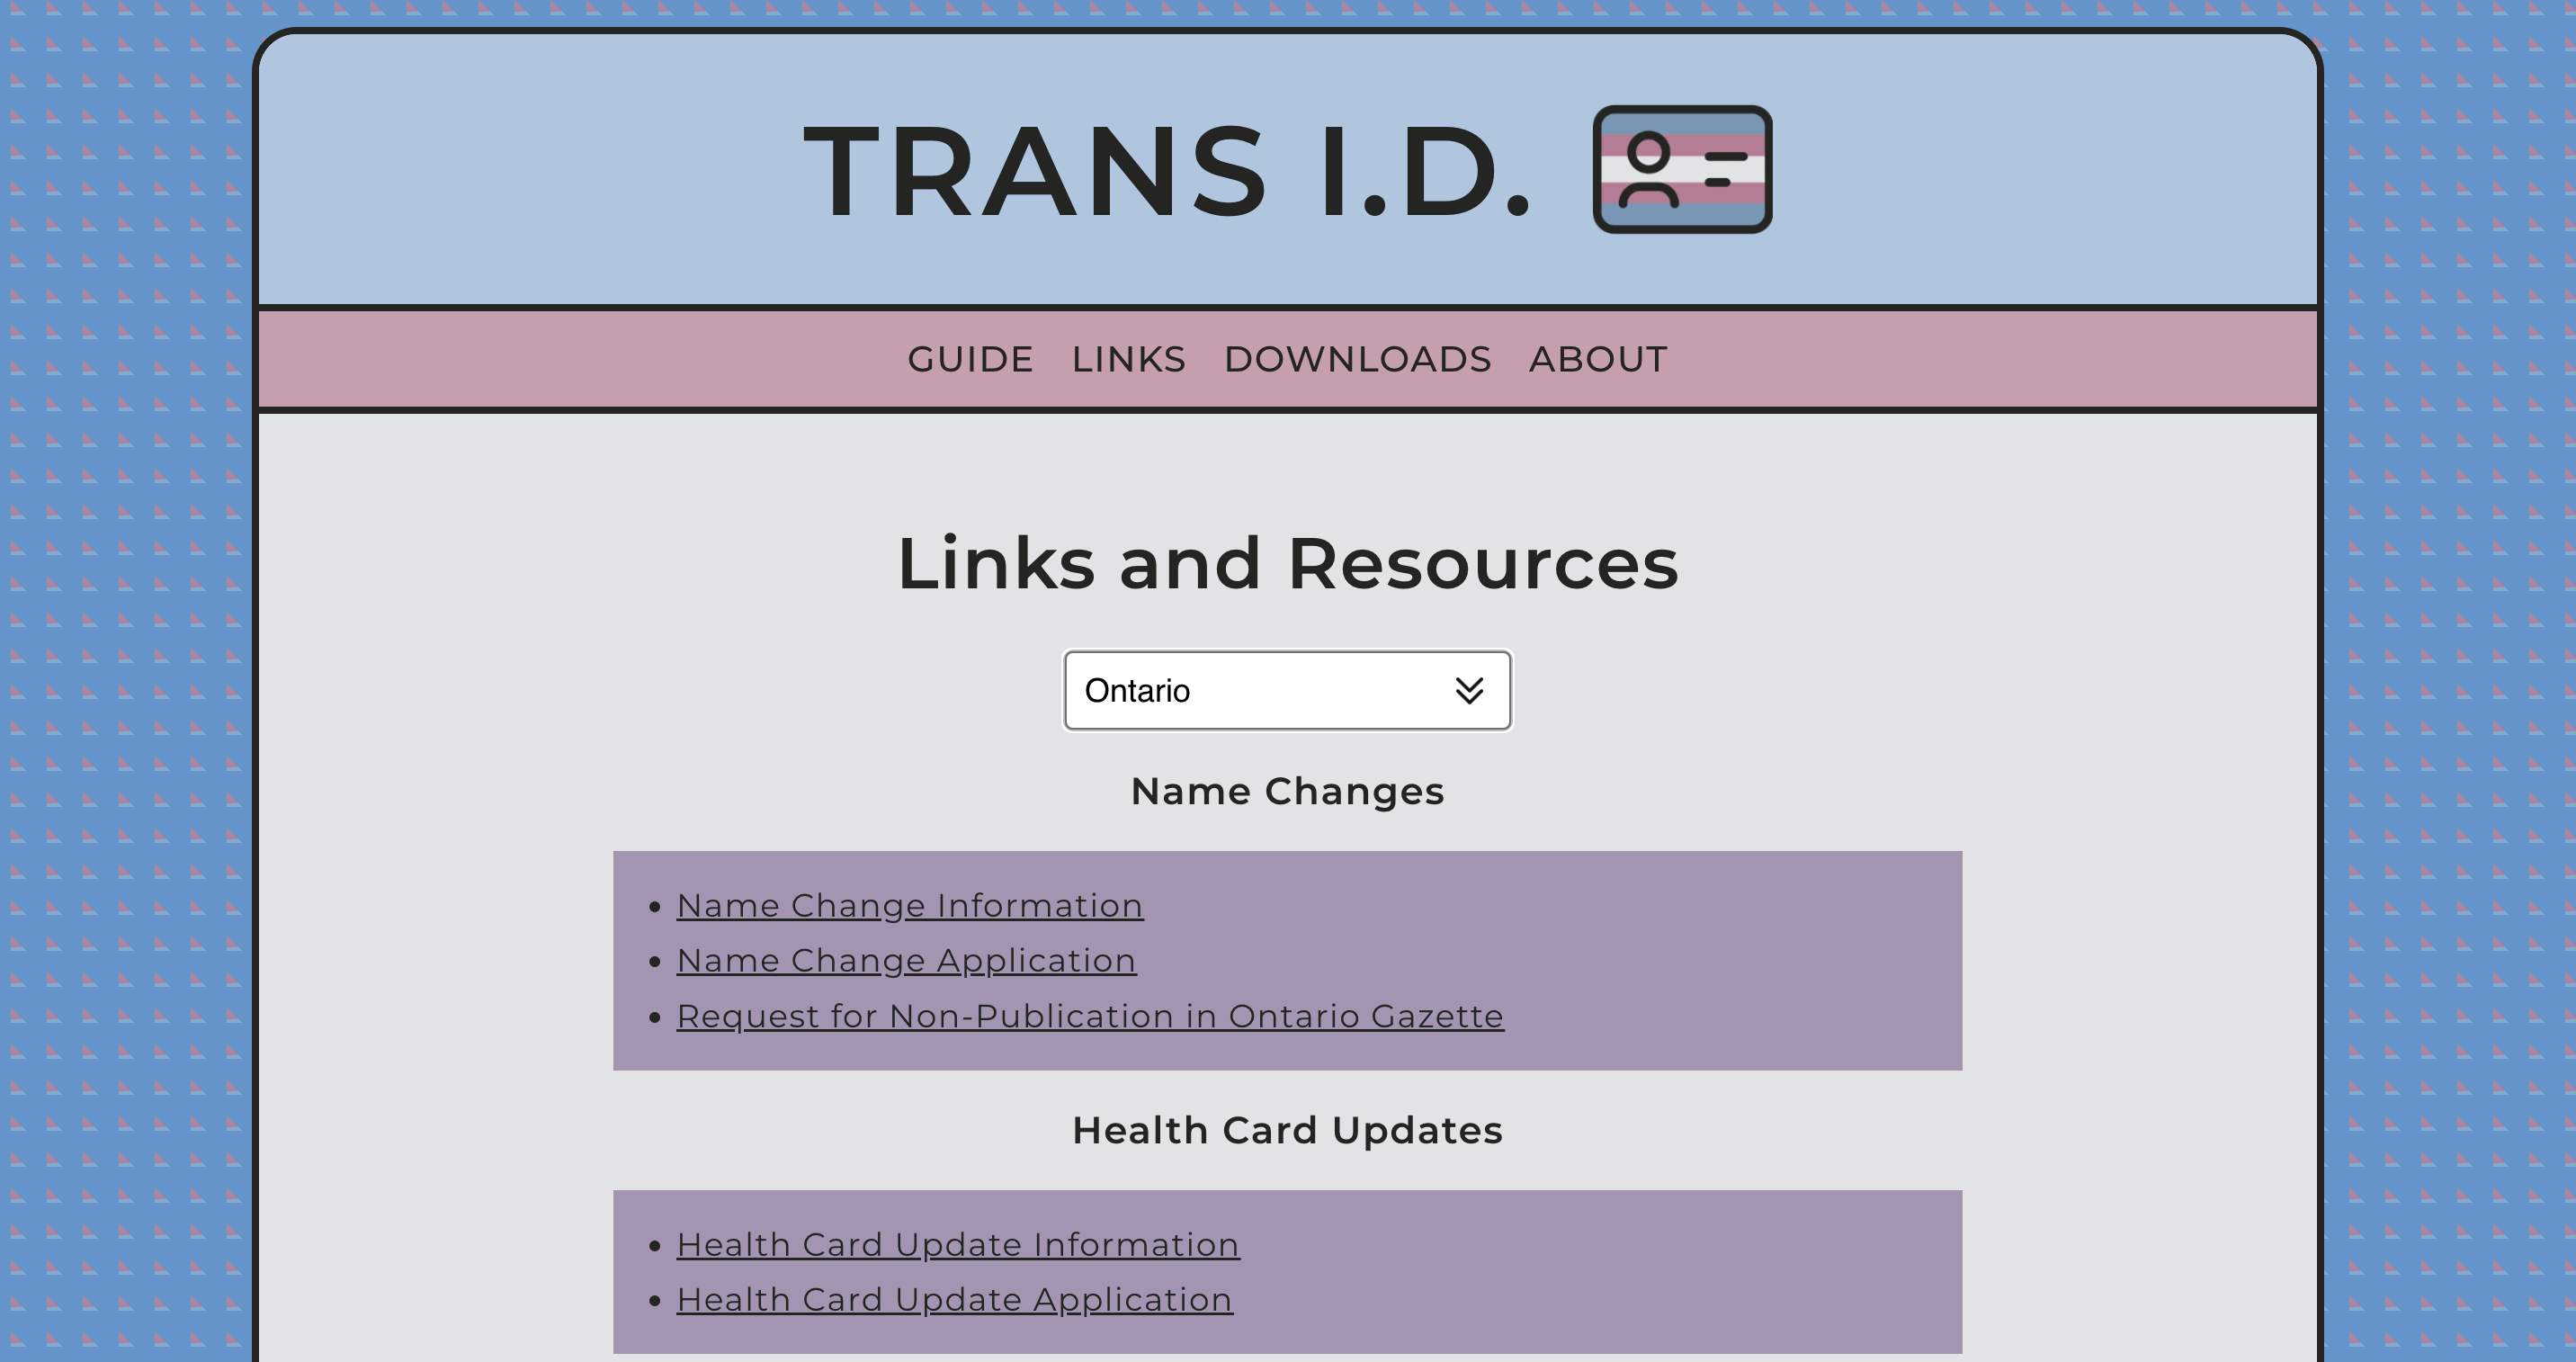 Trans I.D. Guide screenshot by Dana Teagle